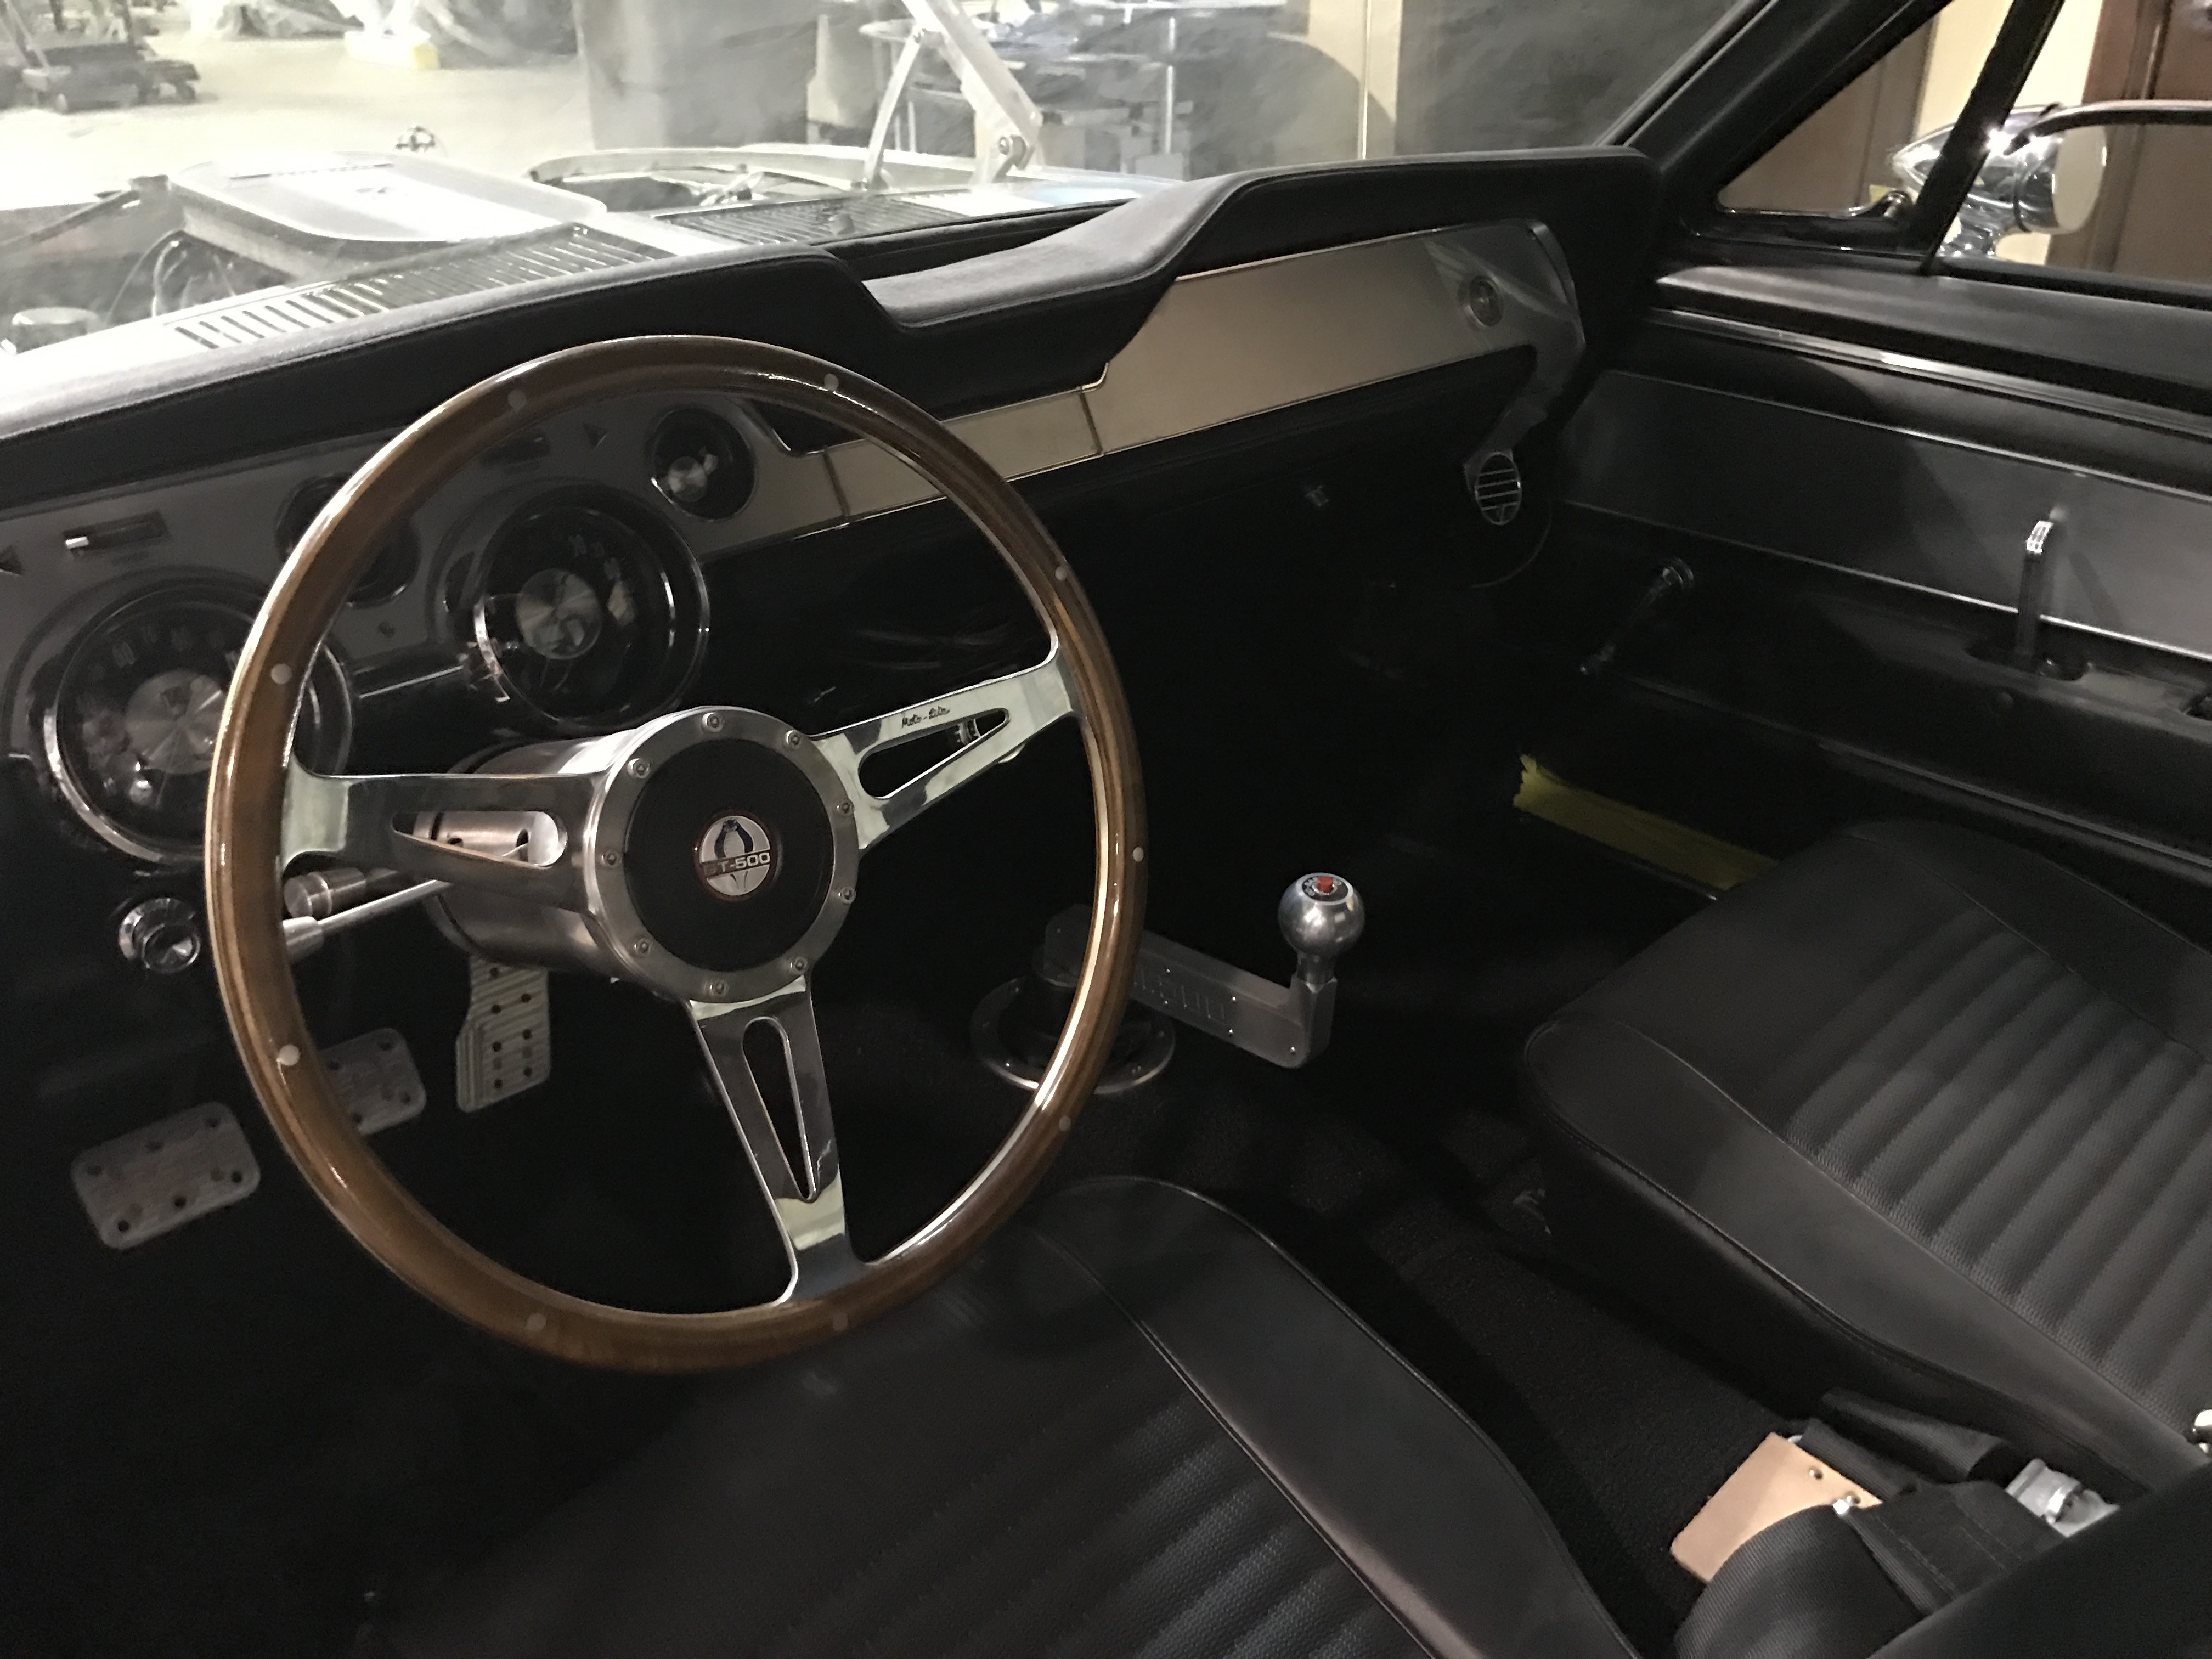 1967 Mustang Eleanor Value